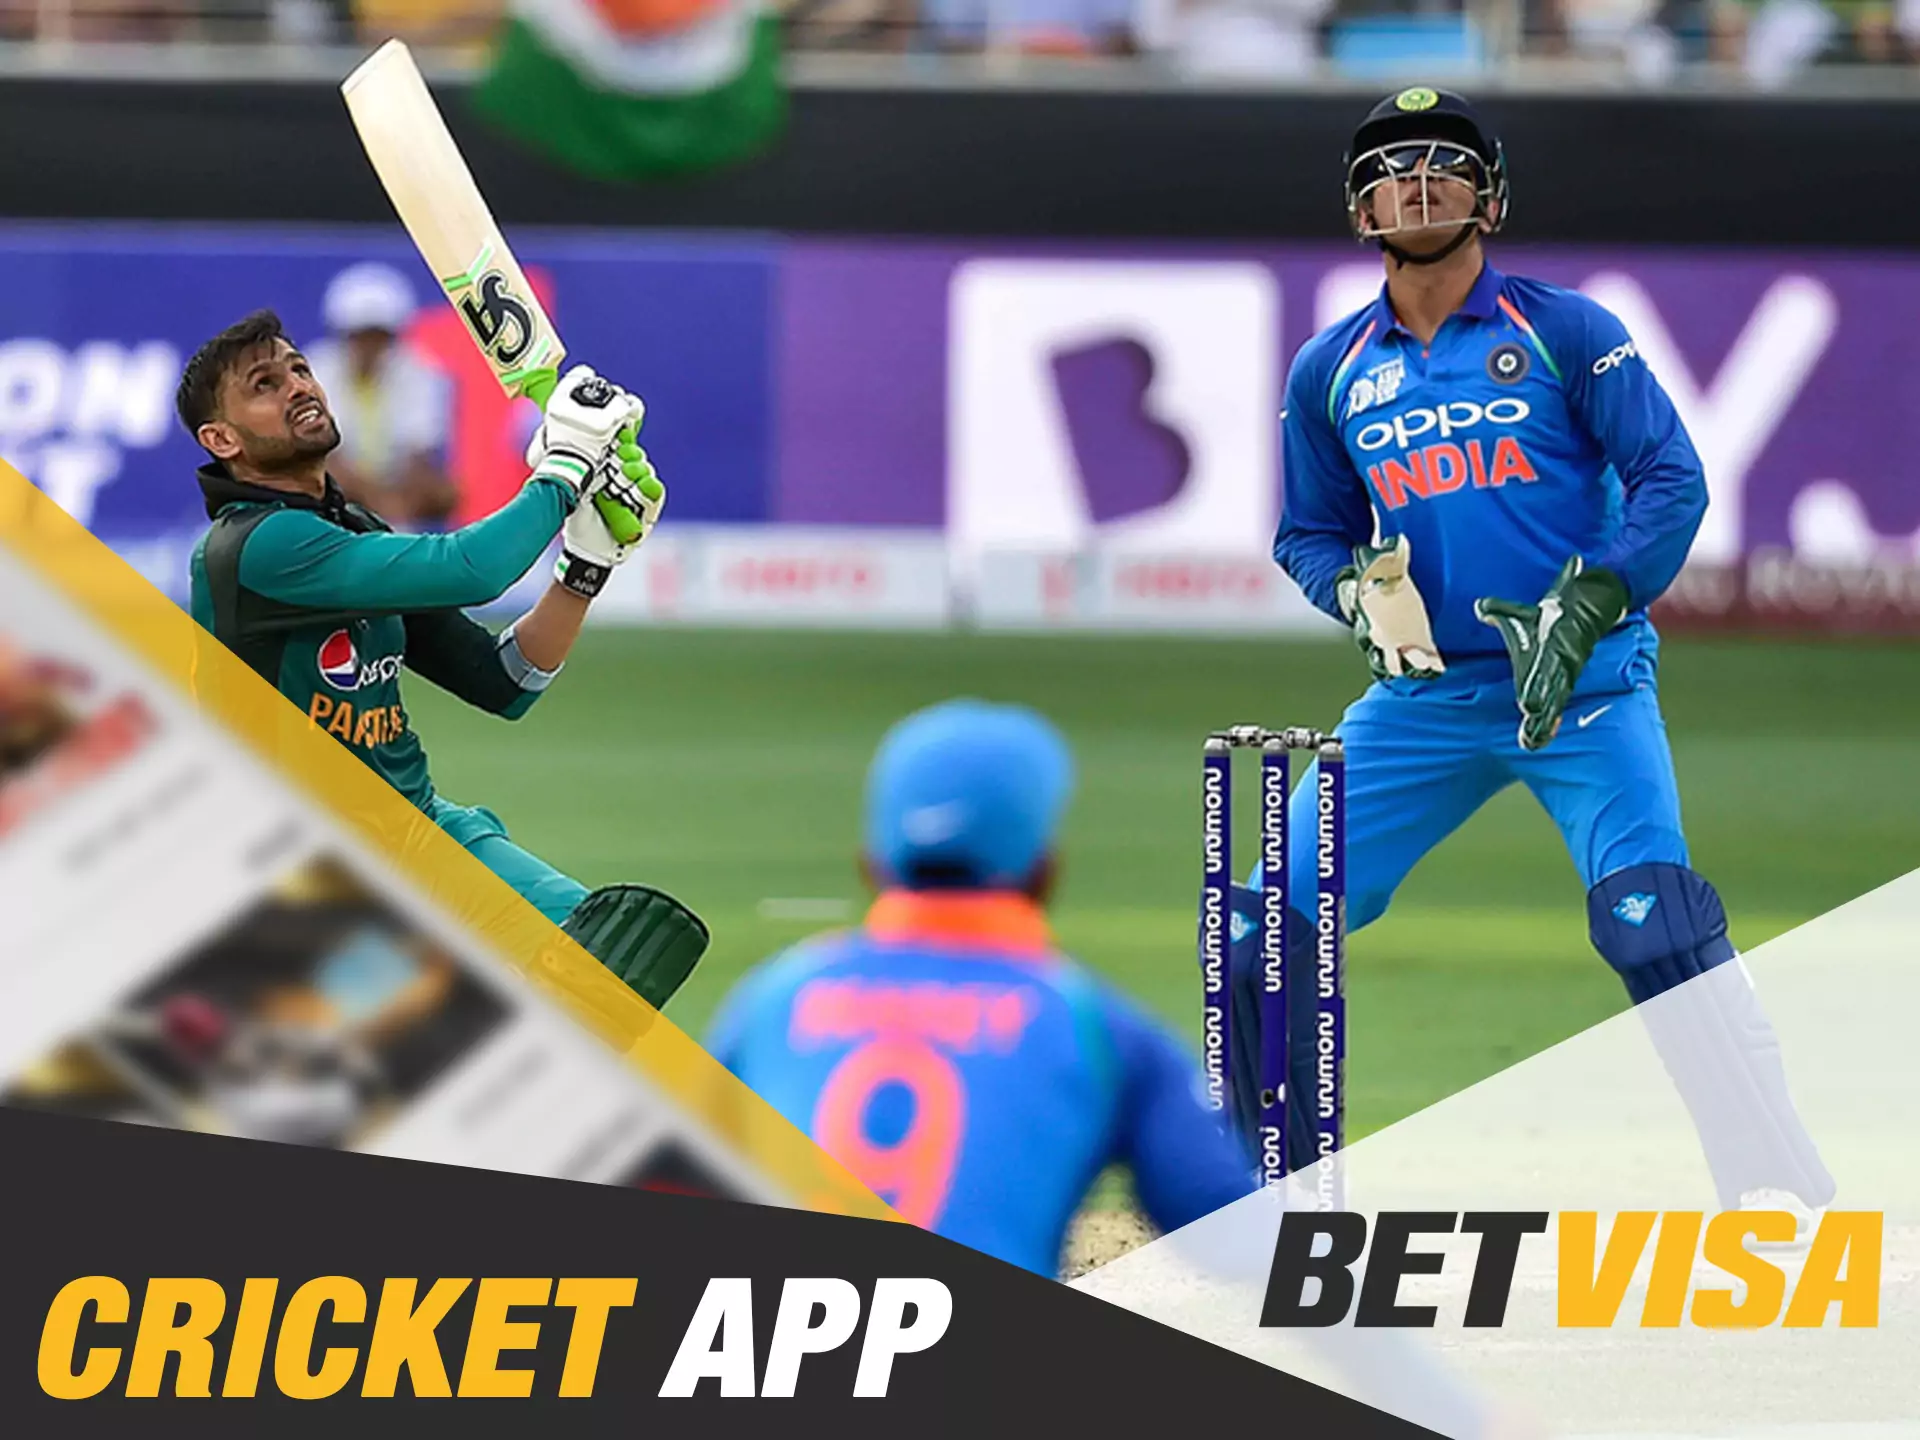 Bet on cricket matches using Betvisa cricket app.